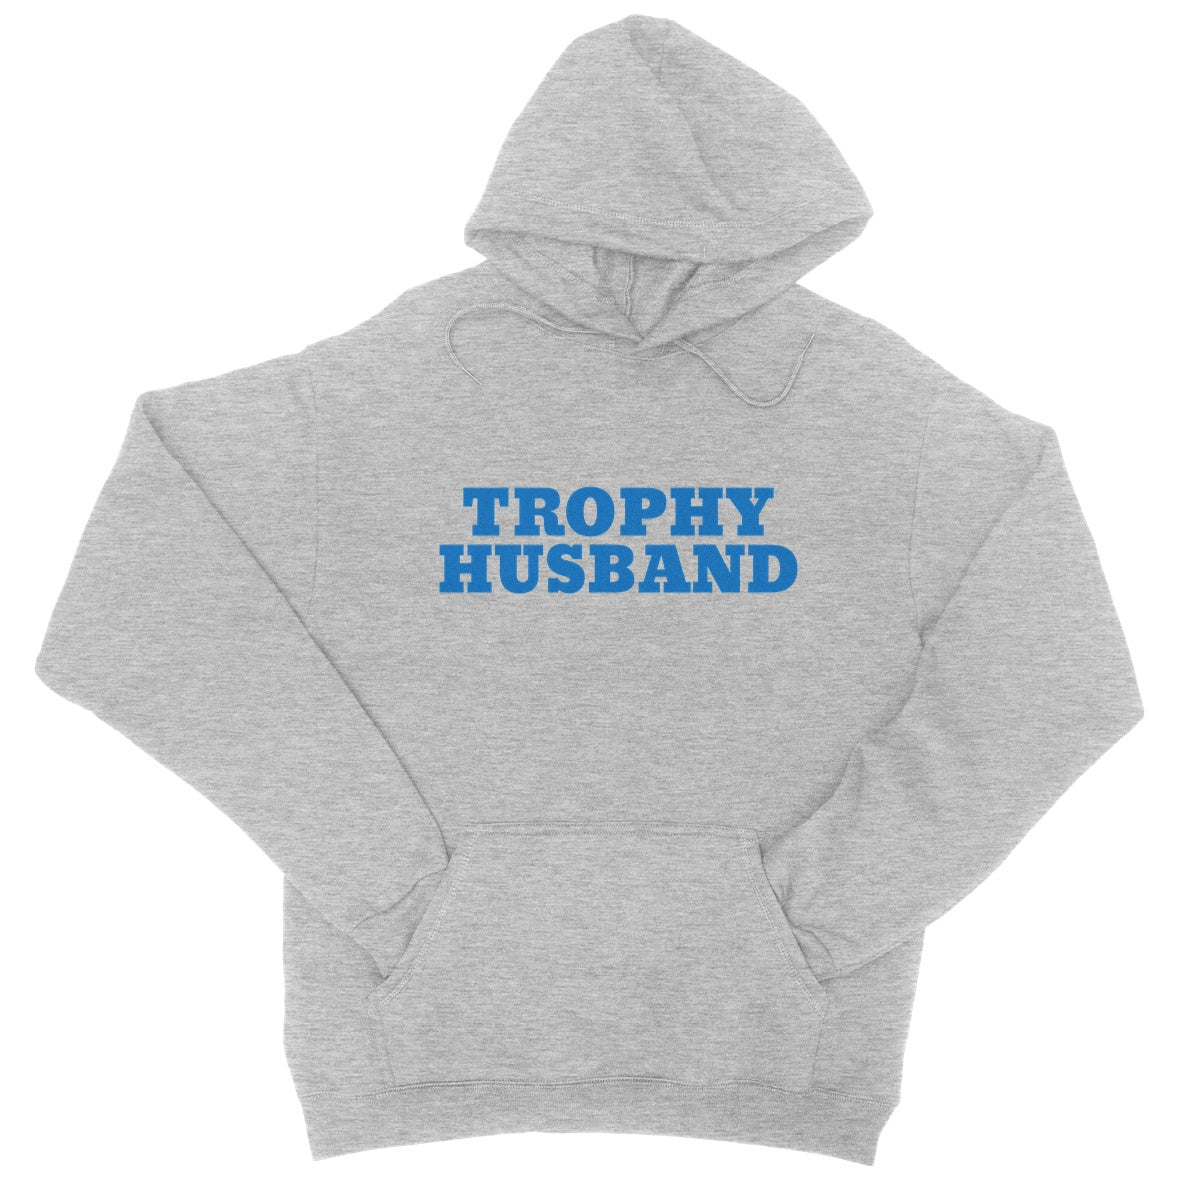 trophy husband hoodie light grey